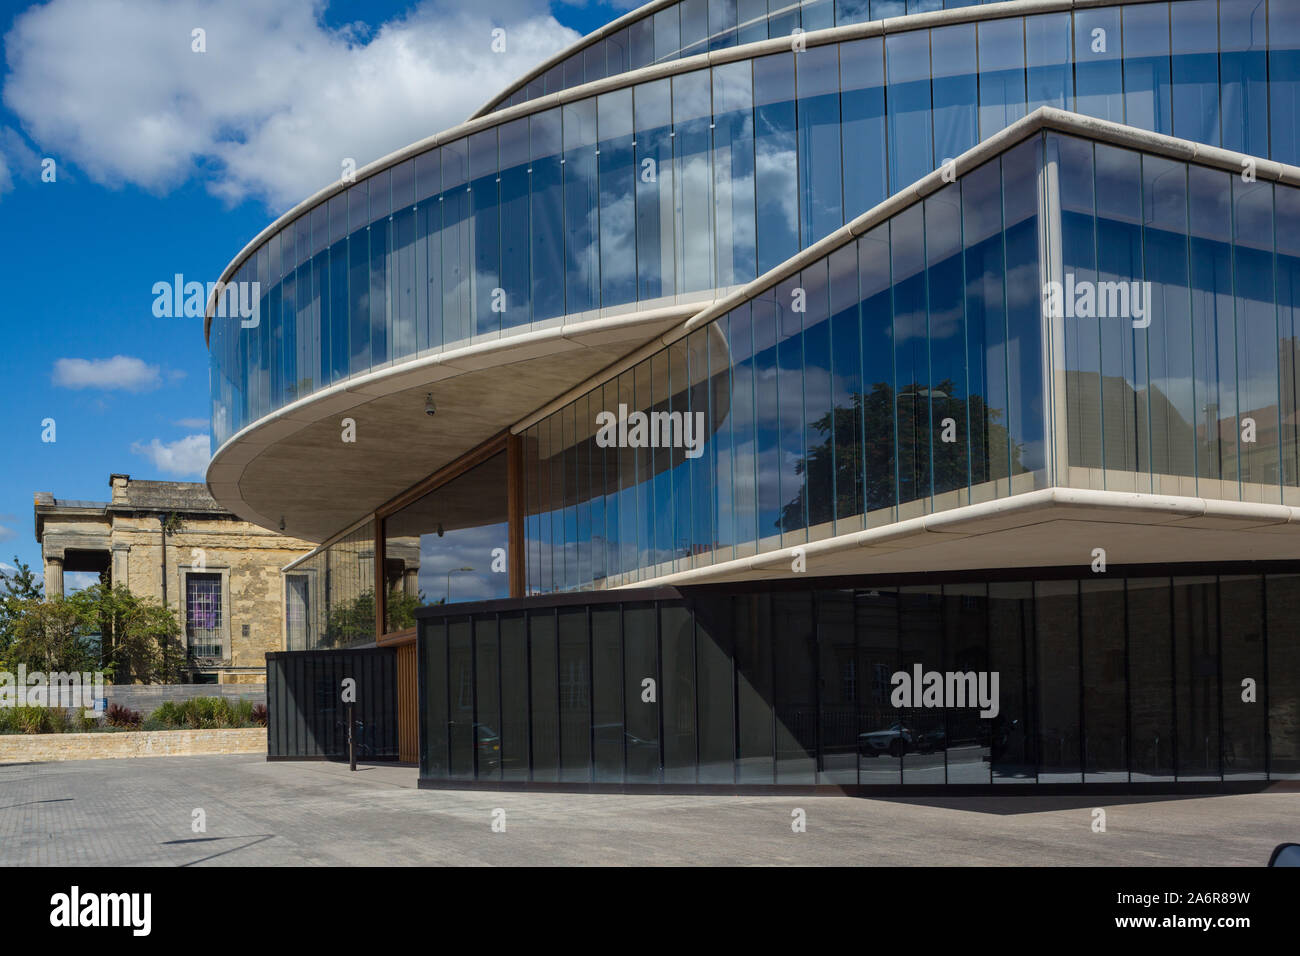 The modern architecture of the Blavatnik School of Government in Walton Street, Oxford designed by Swiss architects Herzog & de Meuron Stock Photo